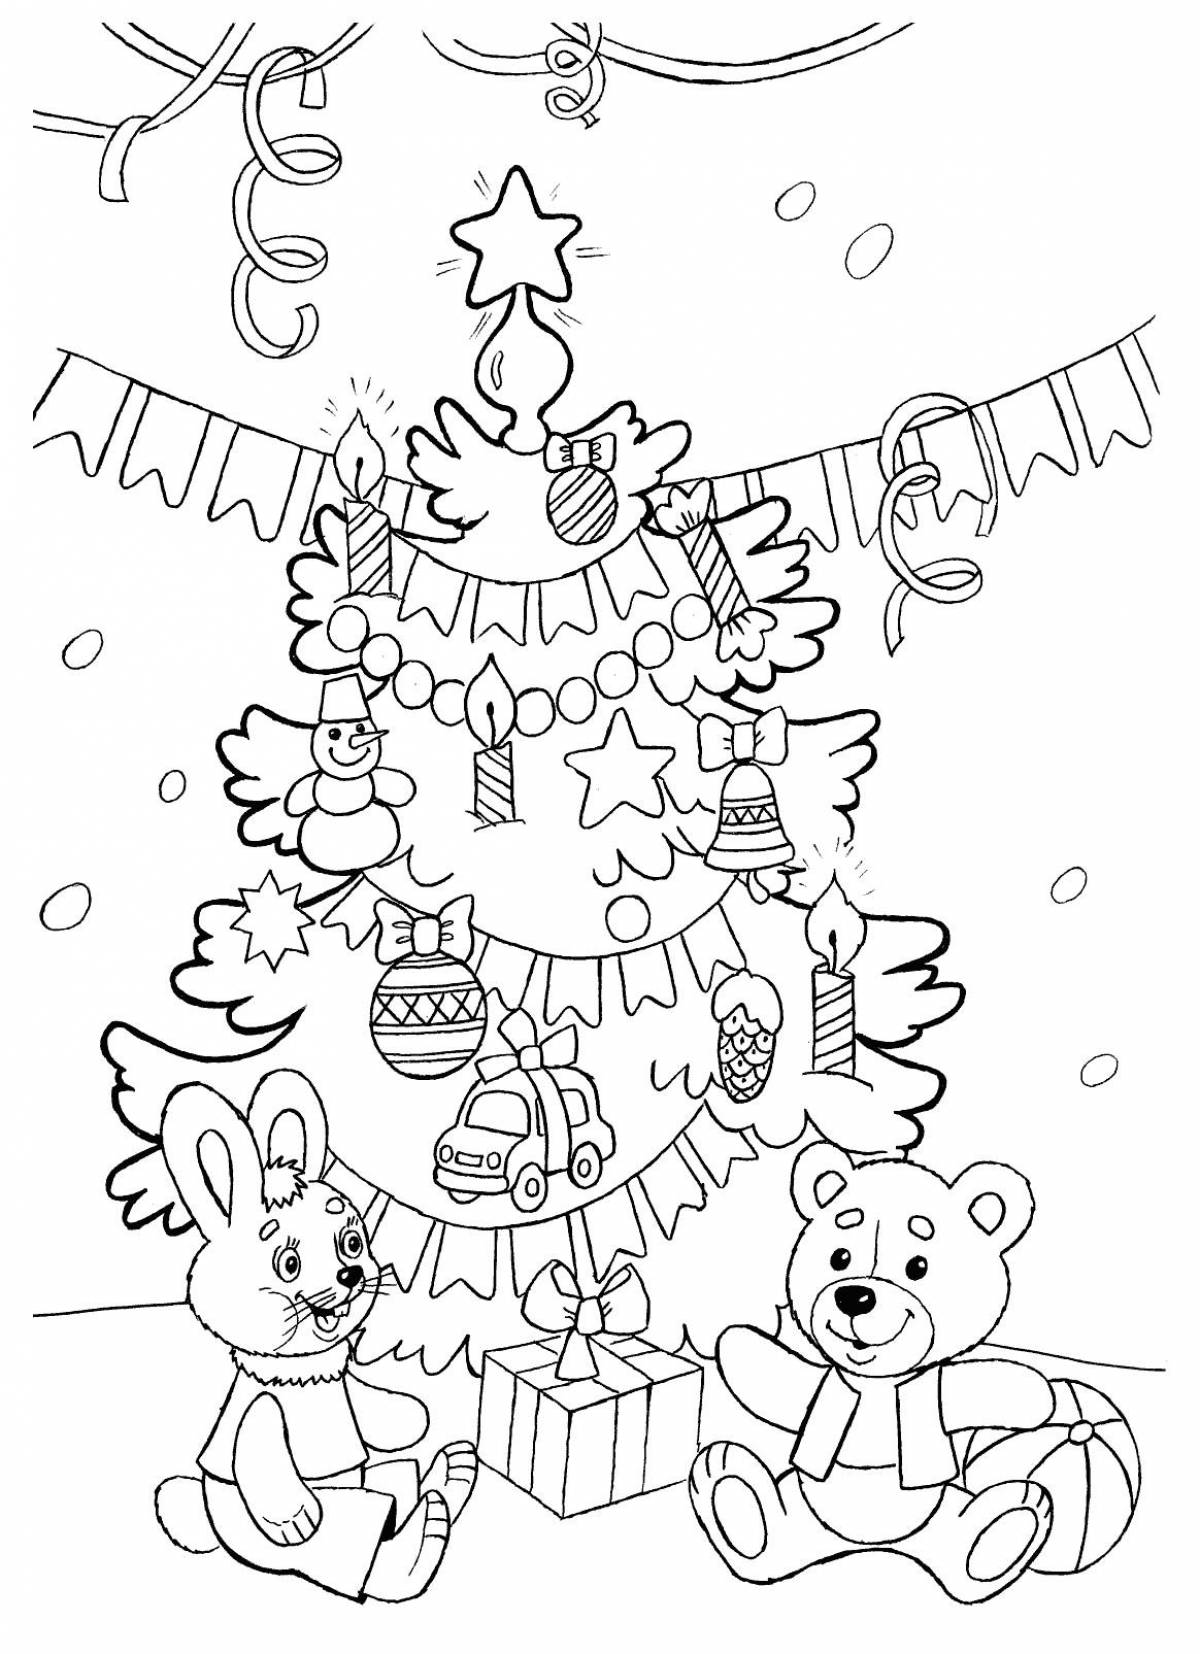 Christmas tree coloring page